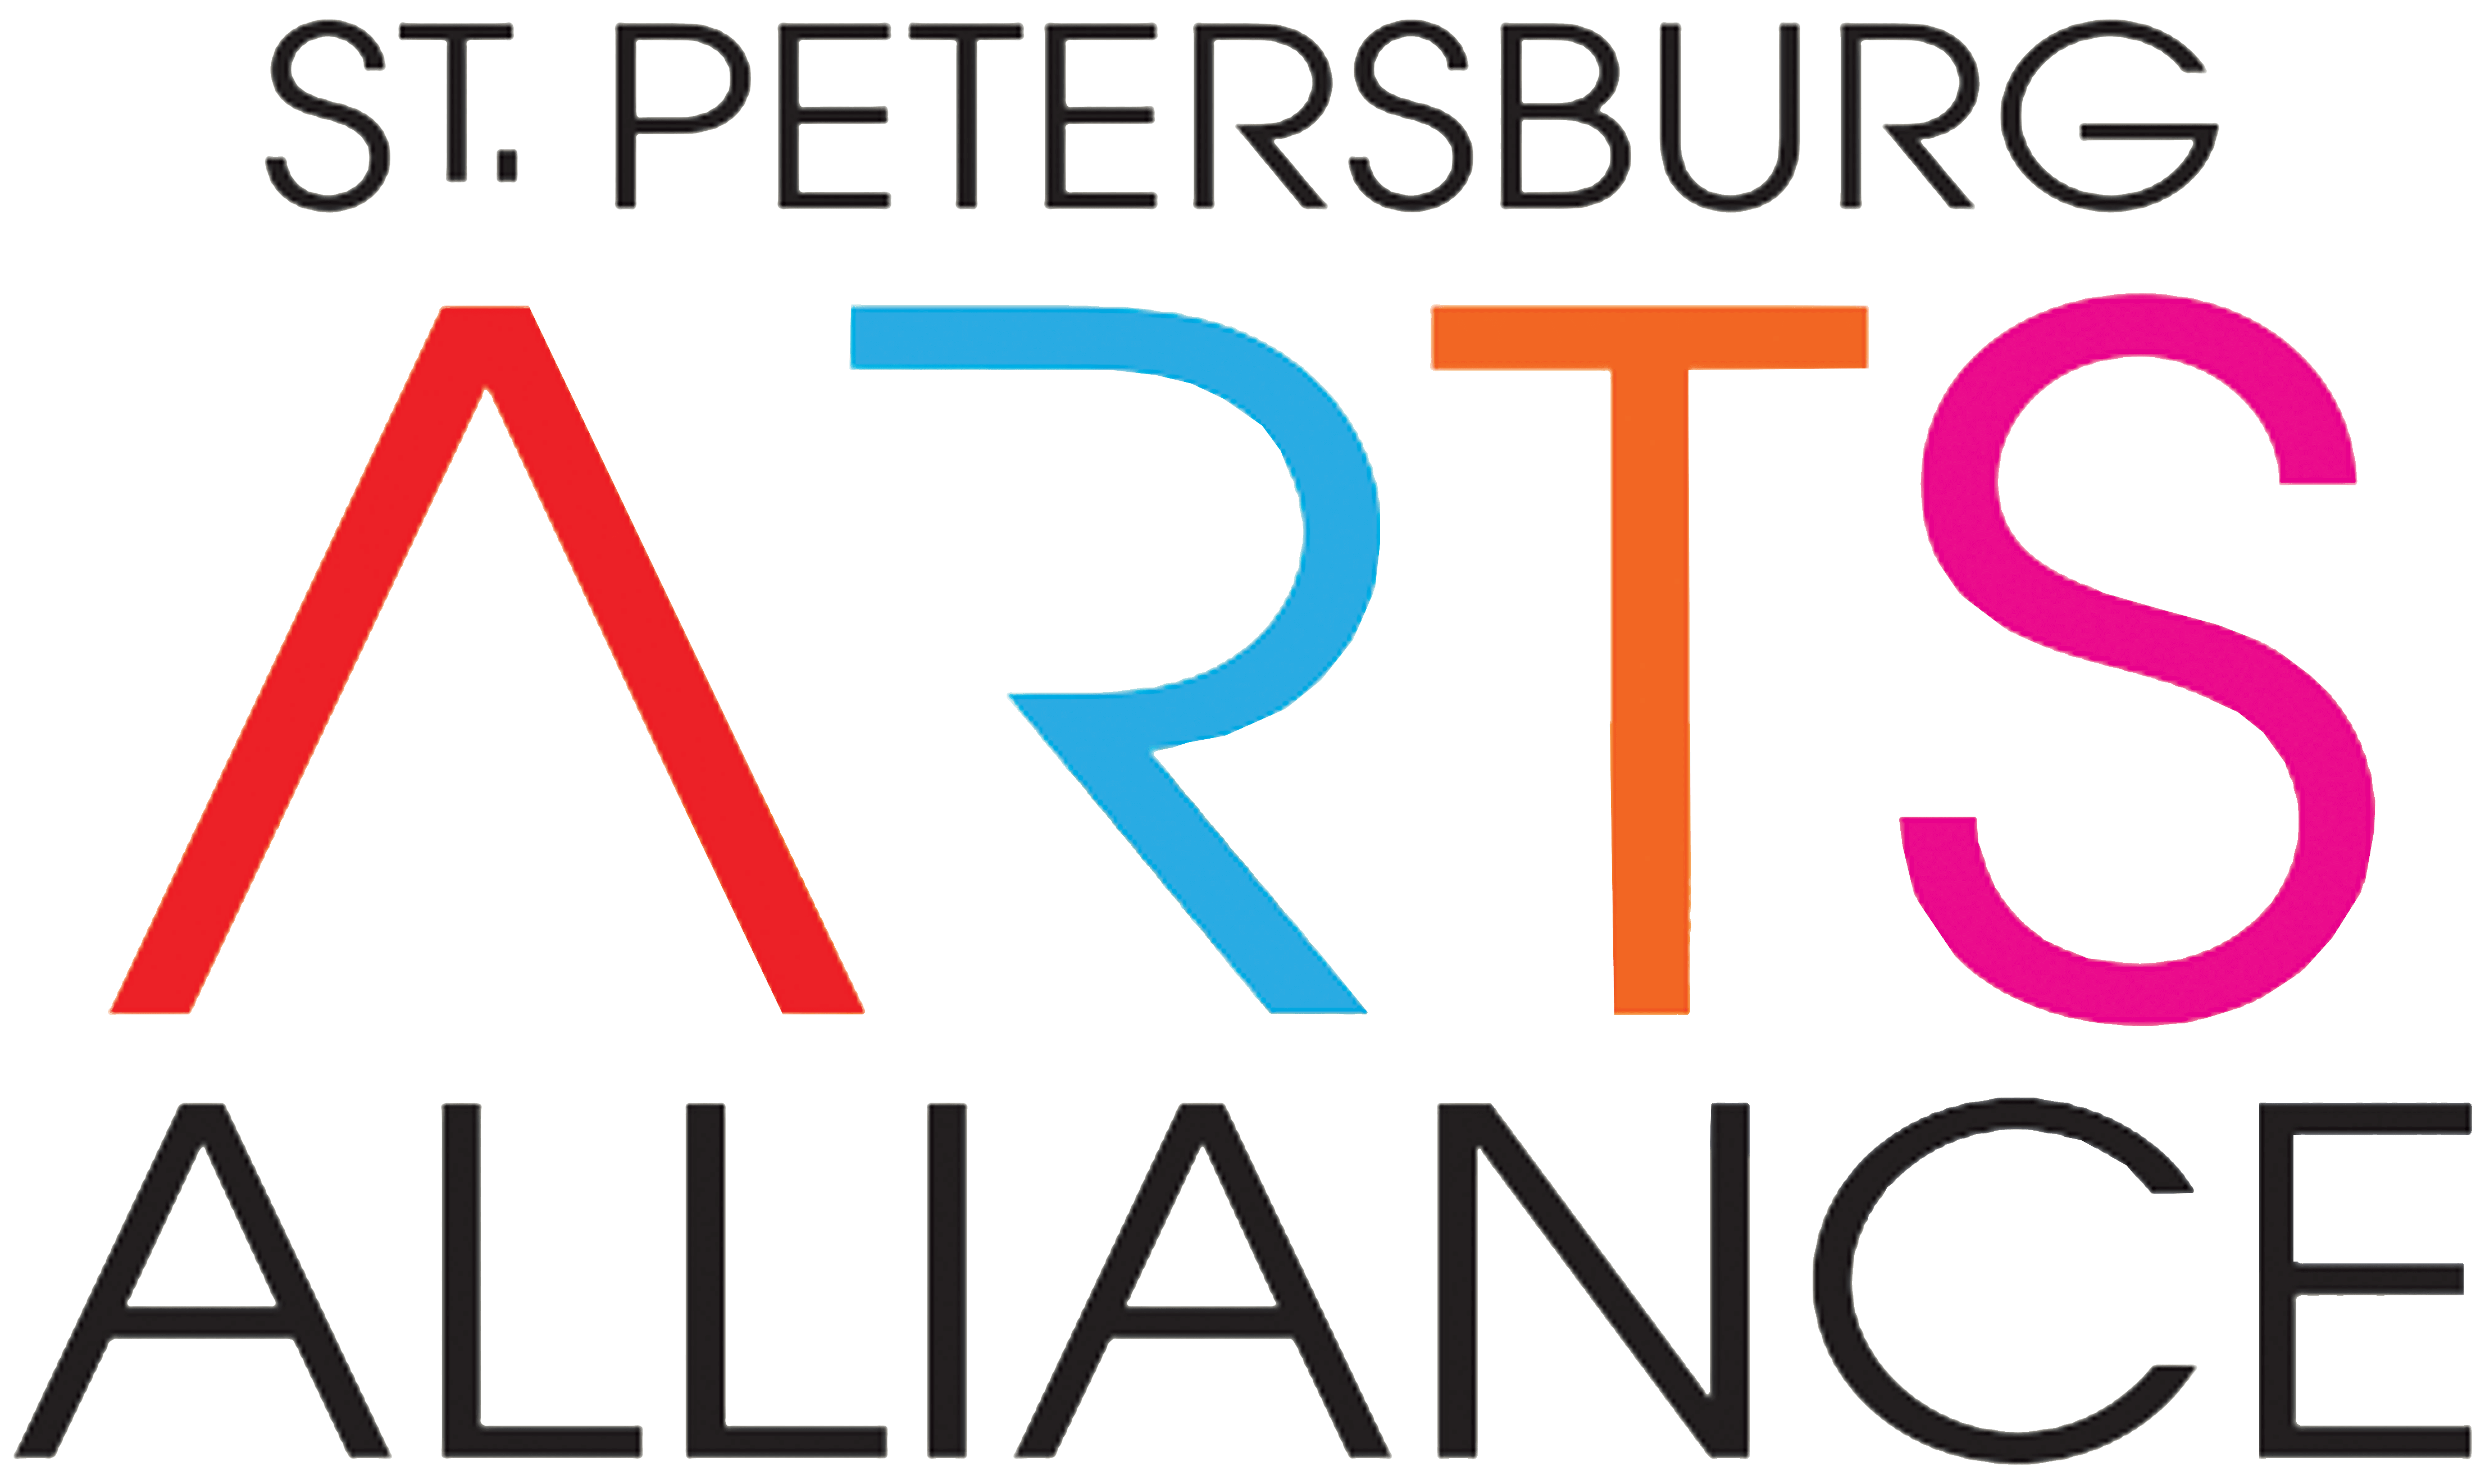 St petersburg aa logo